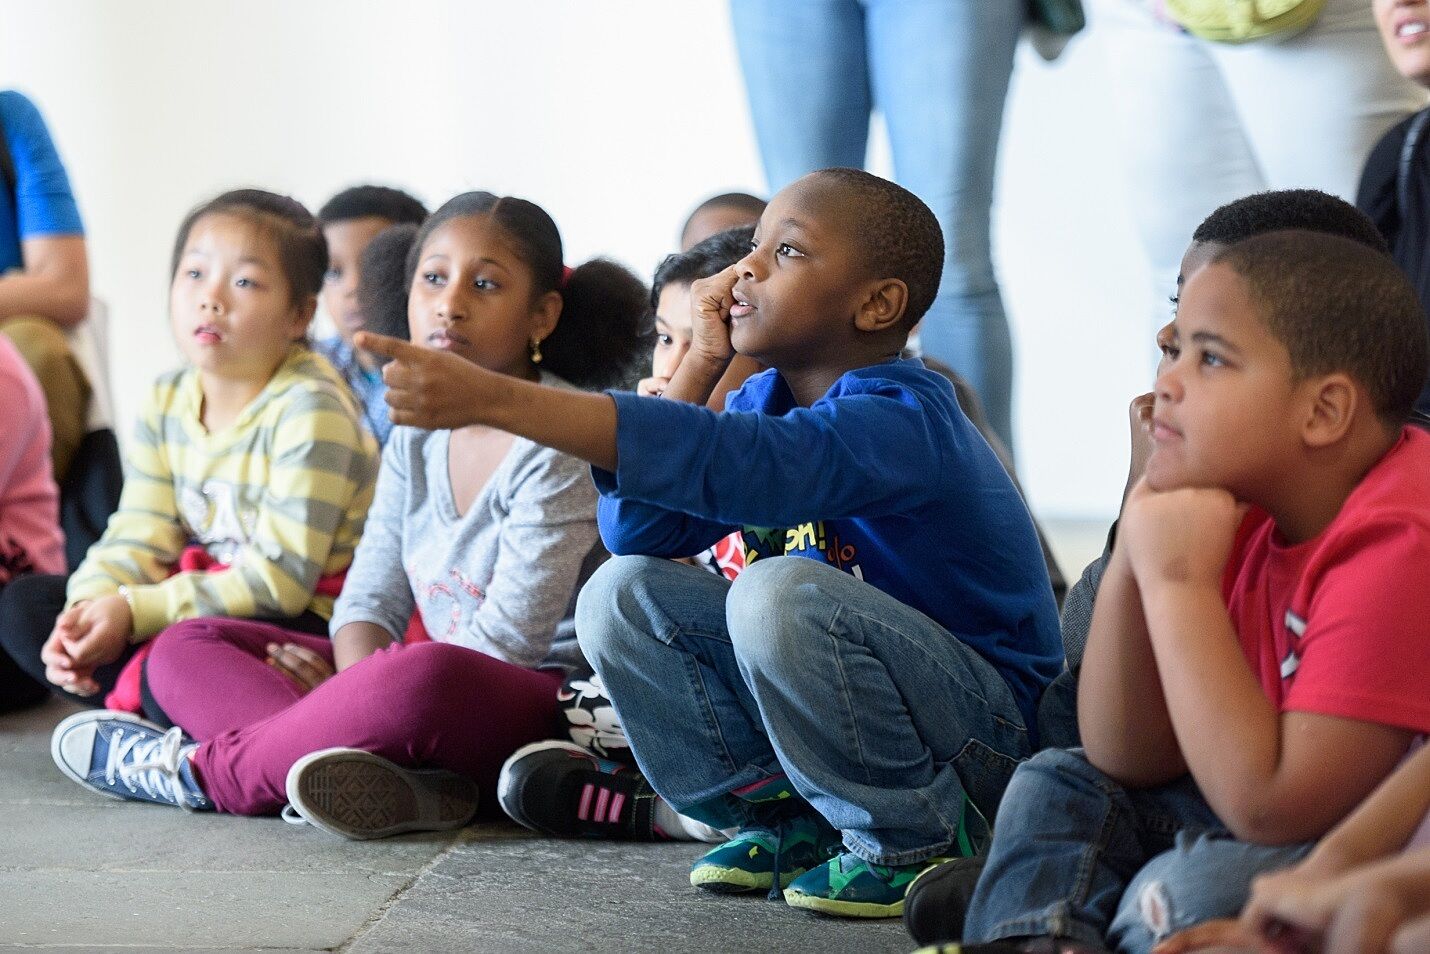 School children enjoying the artwork of Jeff Koons.